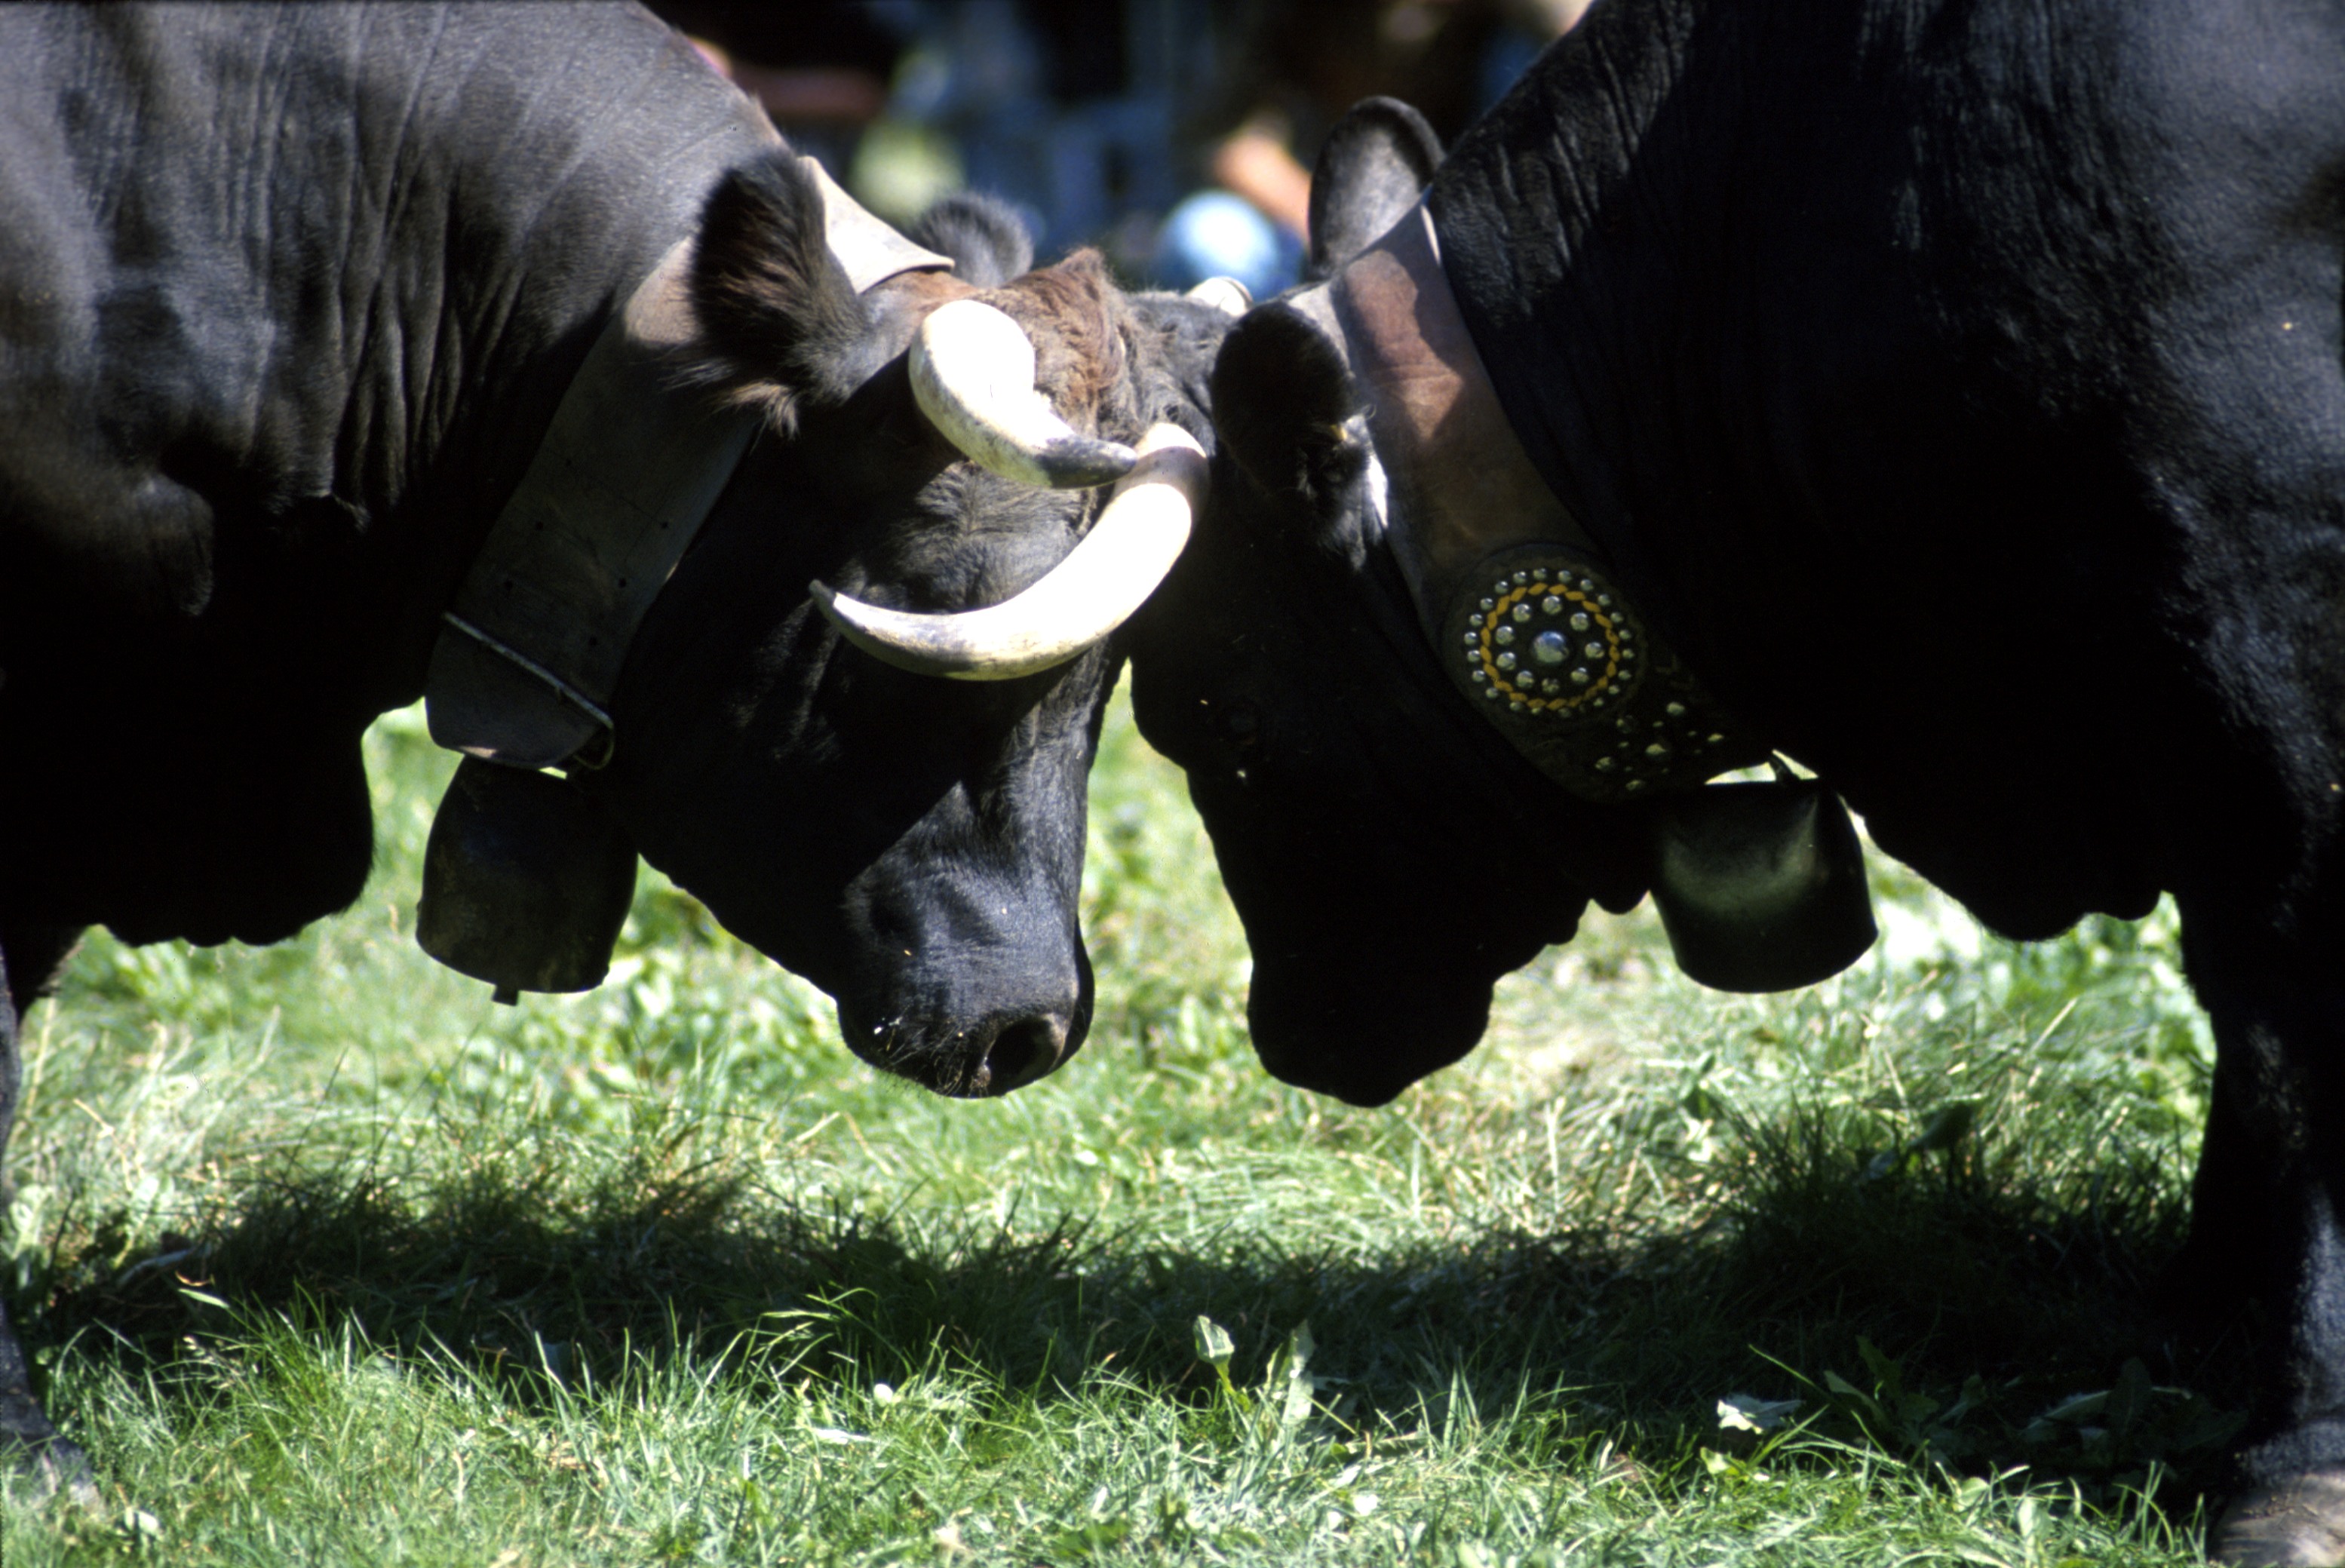 â€œBatailles de Reinesâ€ 2012, le mucche regine si sfidano nell’arena di Aosta